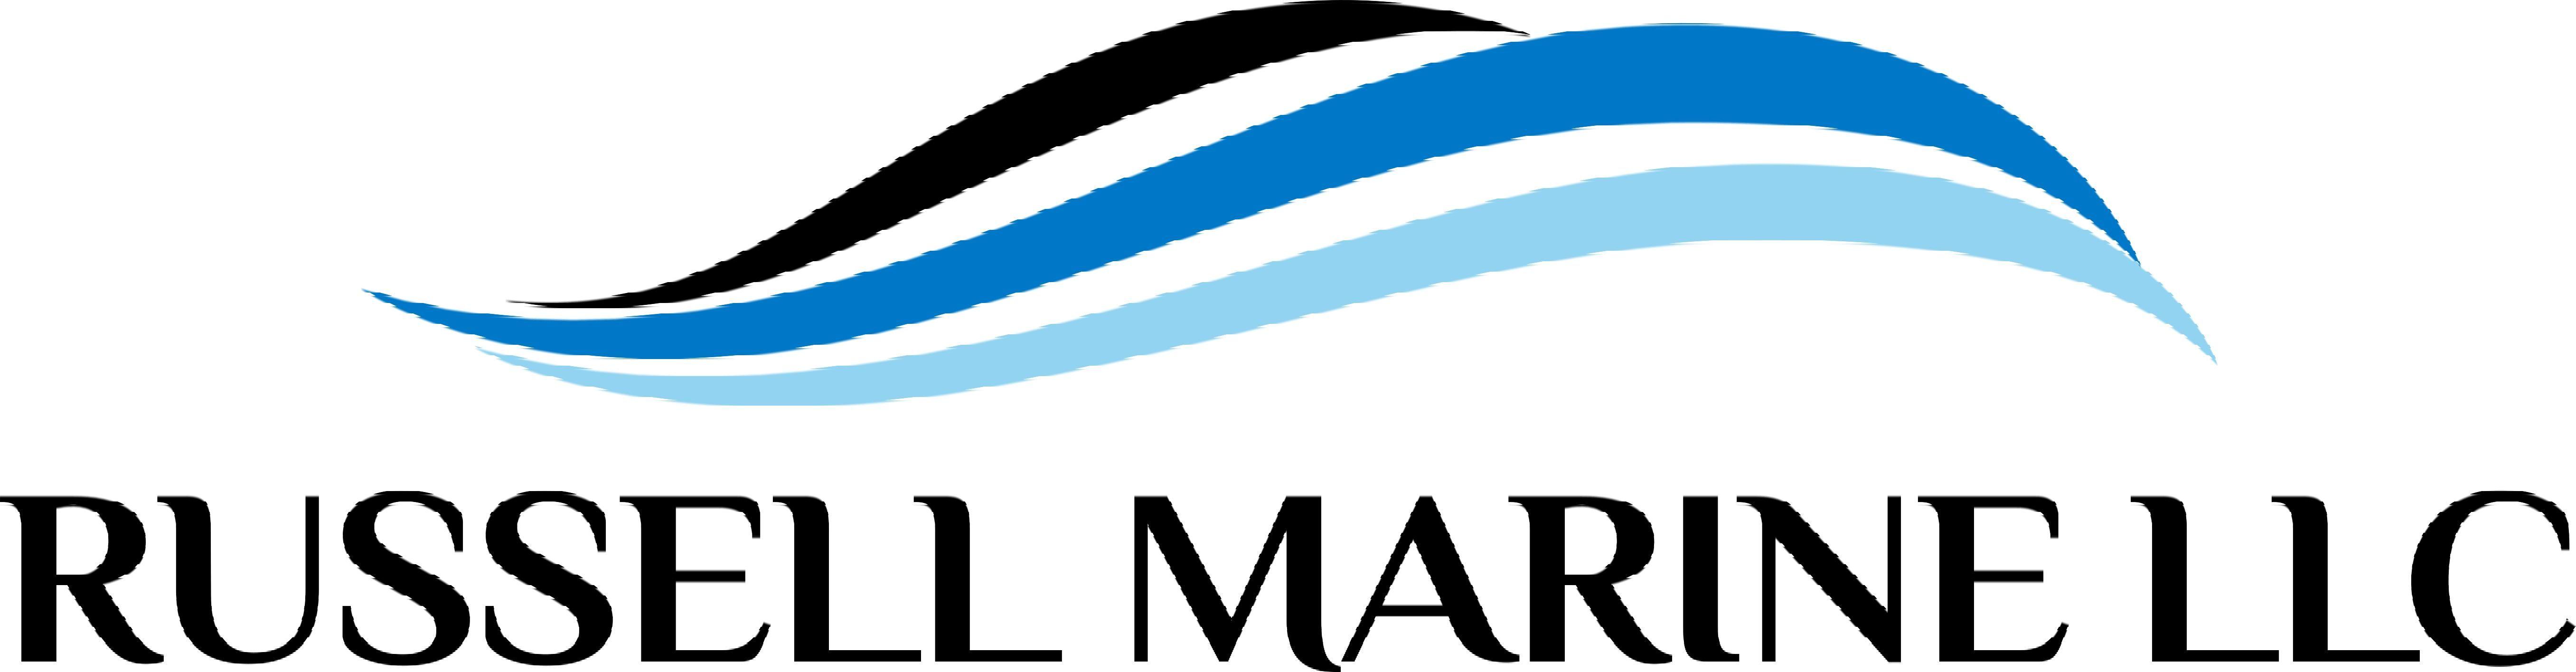 Russell Logo - Russell Marine LLC